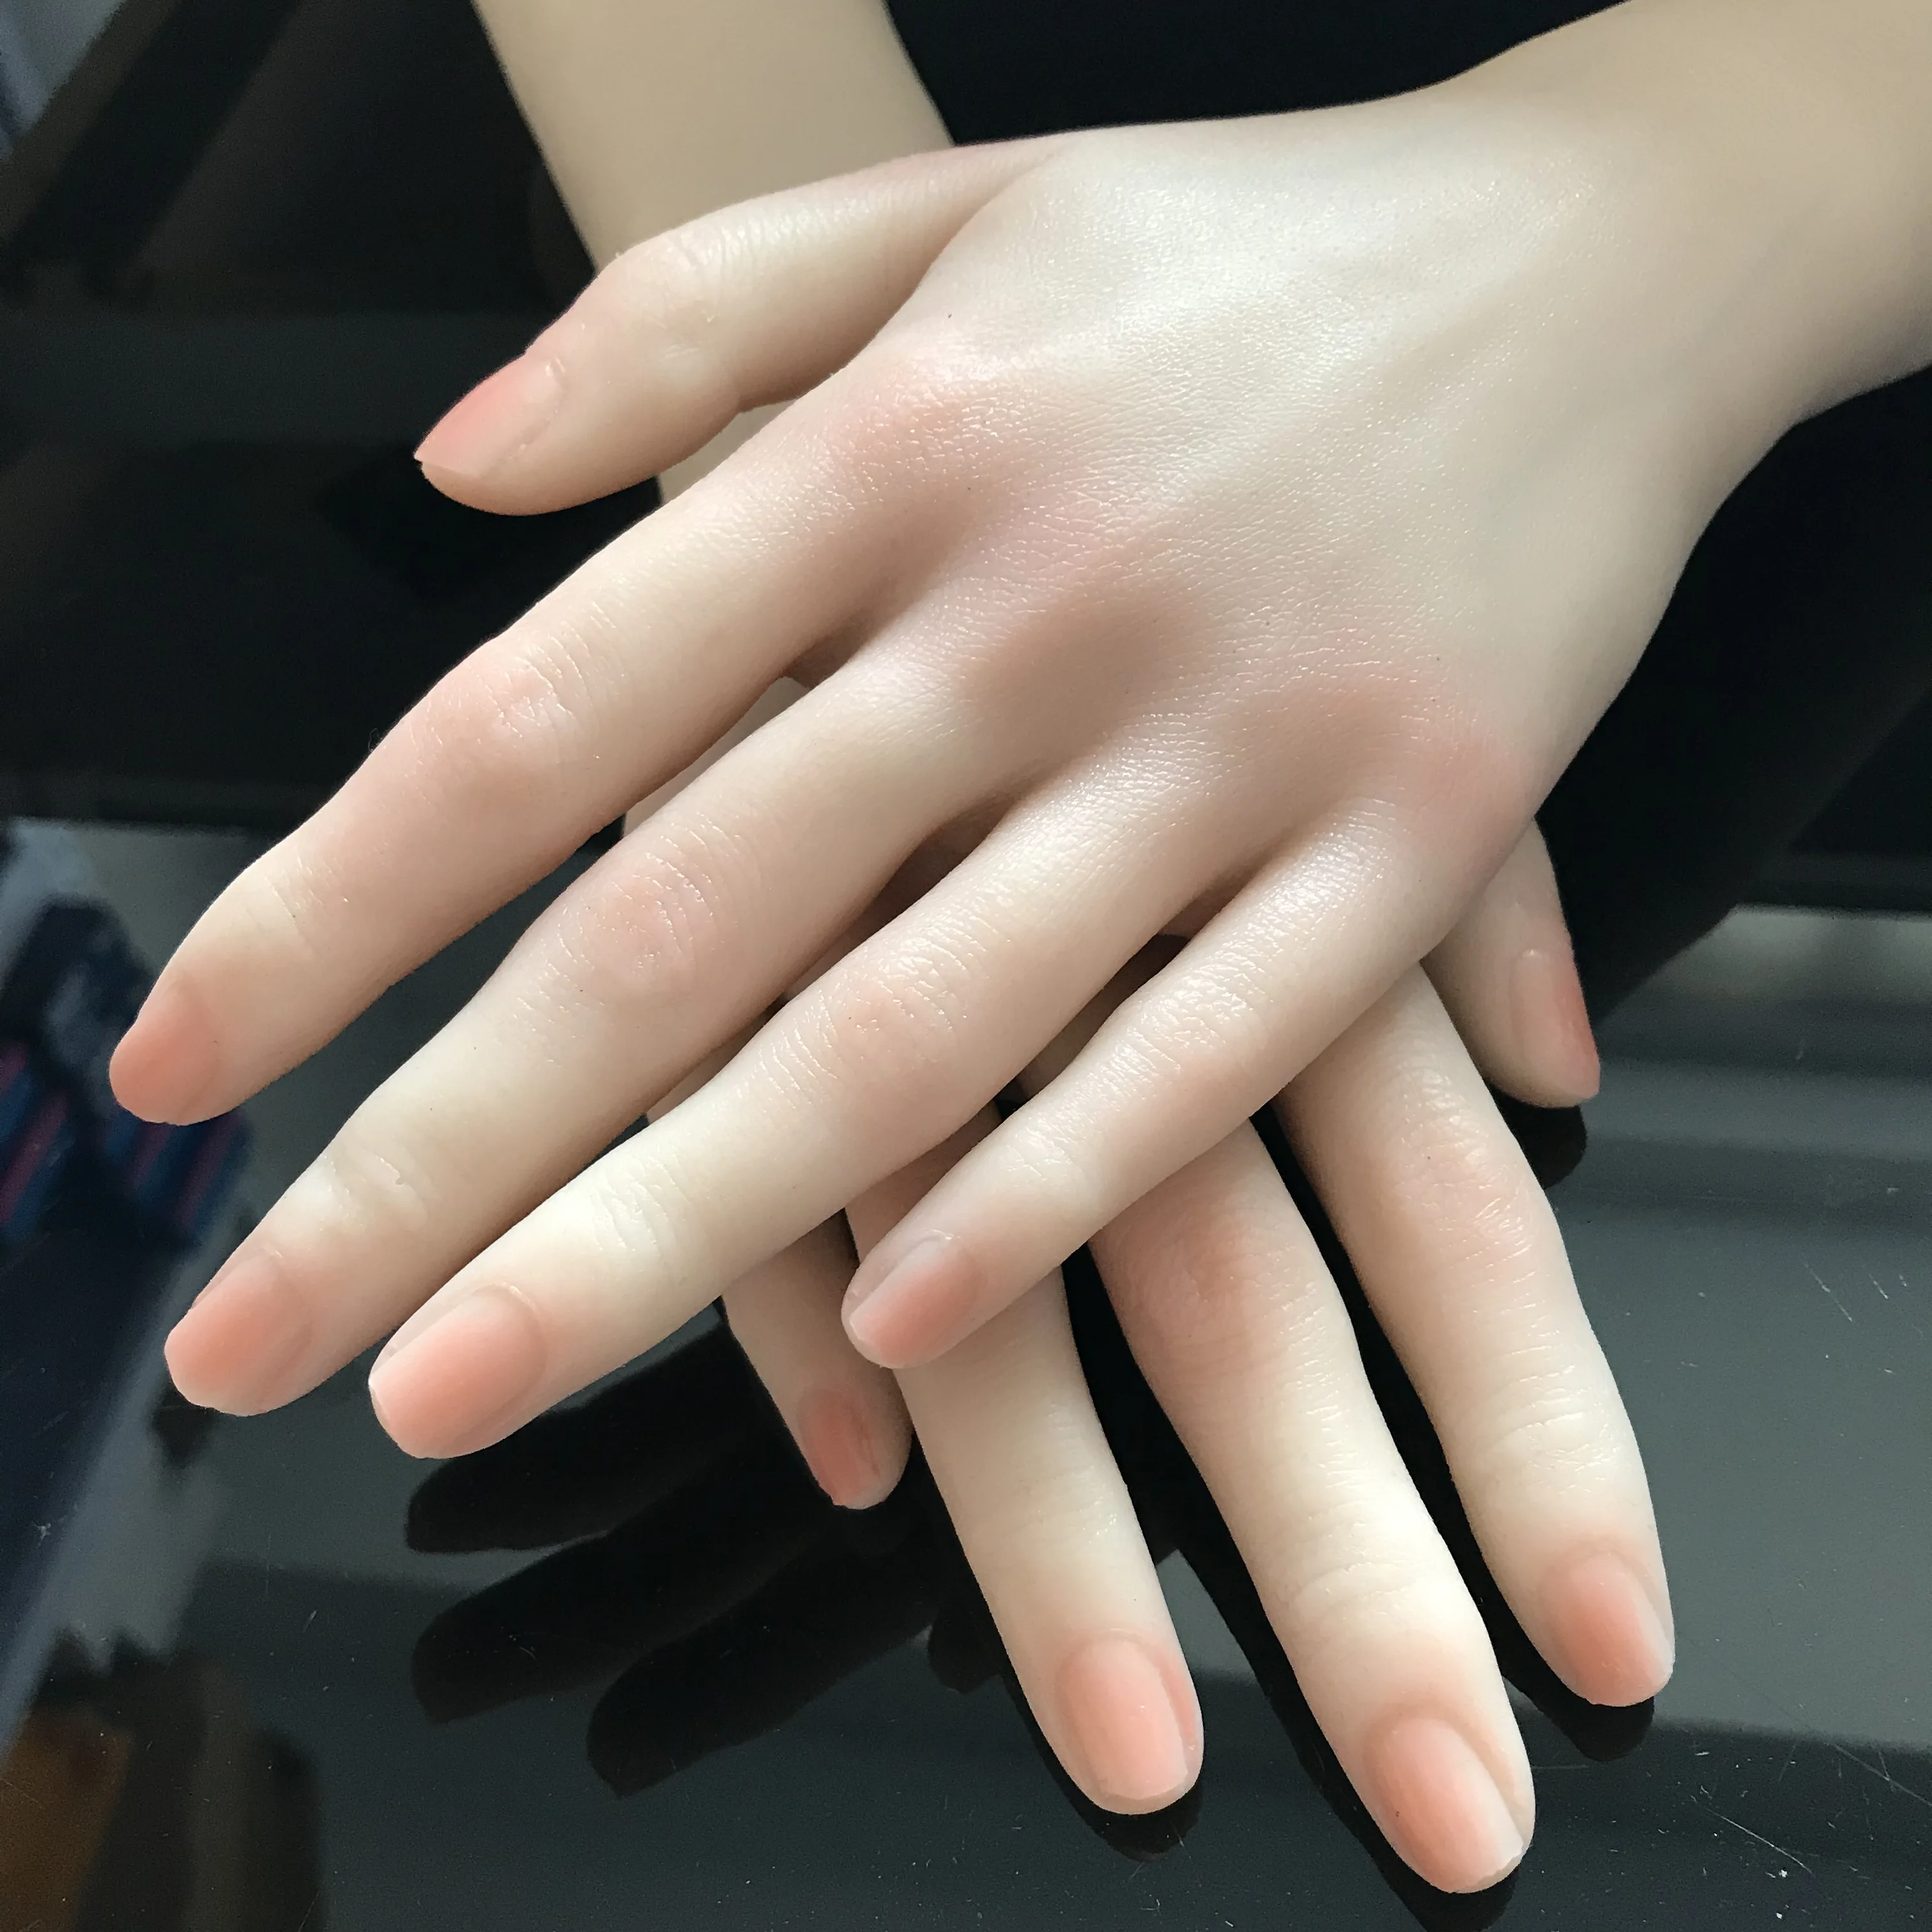 MagiDeal 1 Lab Supplies 1 schlanke weibliche Silikon Hand Modell Nail Art 